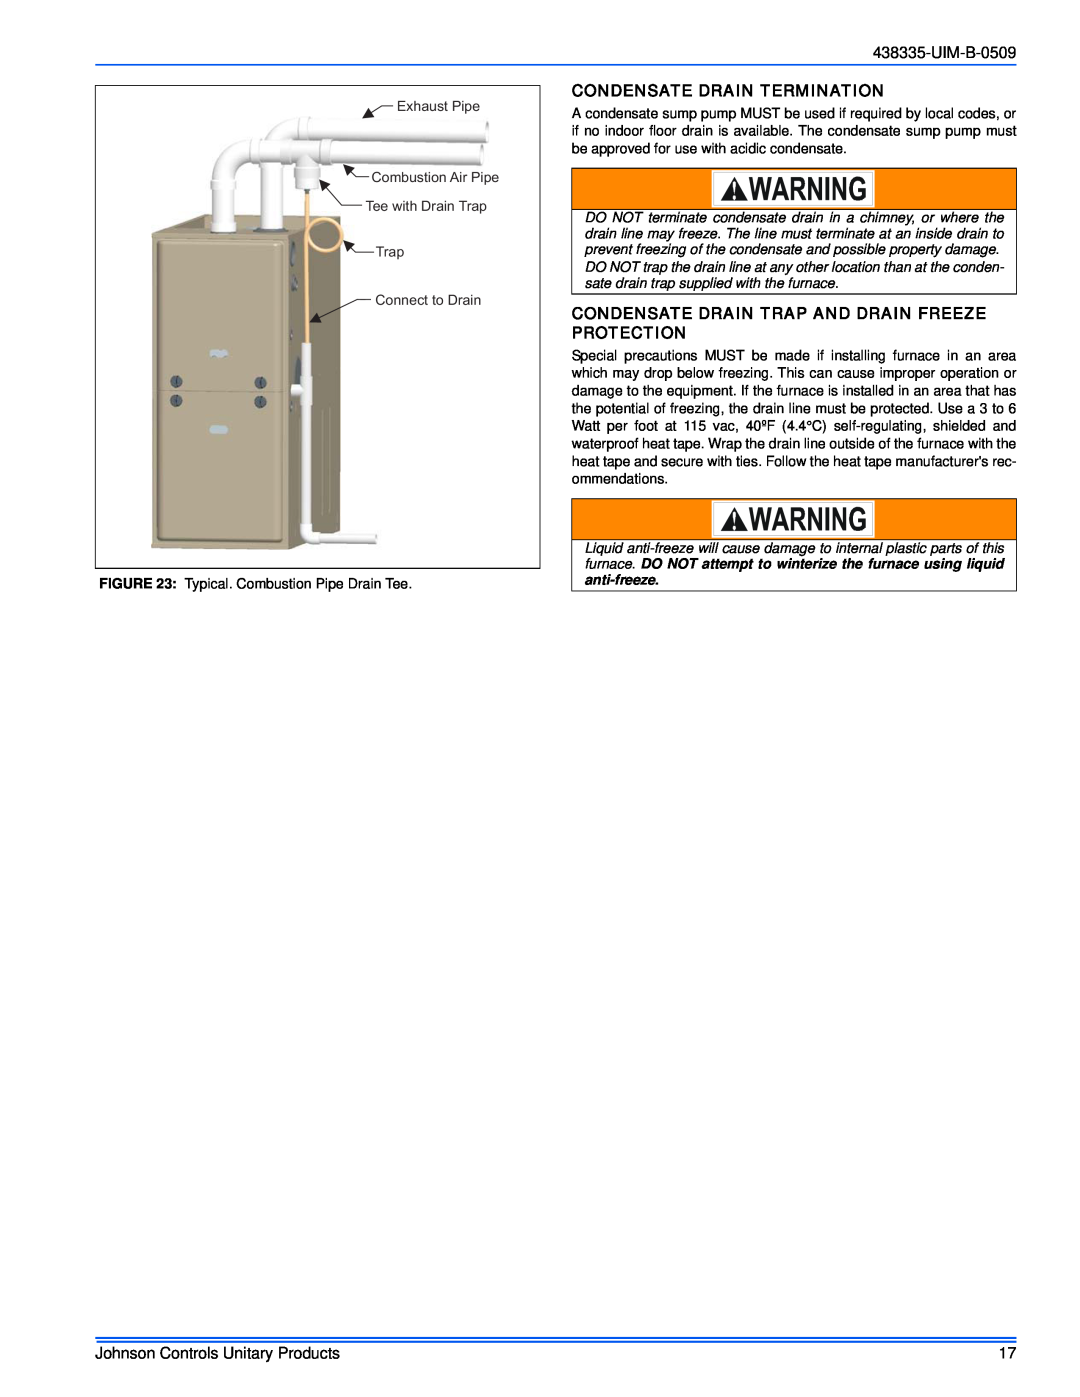 Johnson Controls TM9V MP UIM-B-0509, Condensate Drain Termination, Condensate Drain Trap And Drain Freeze Protection 